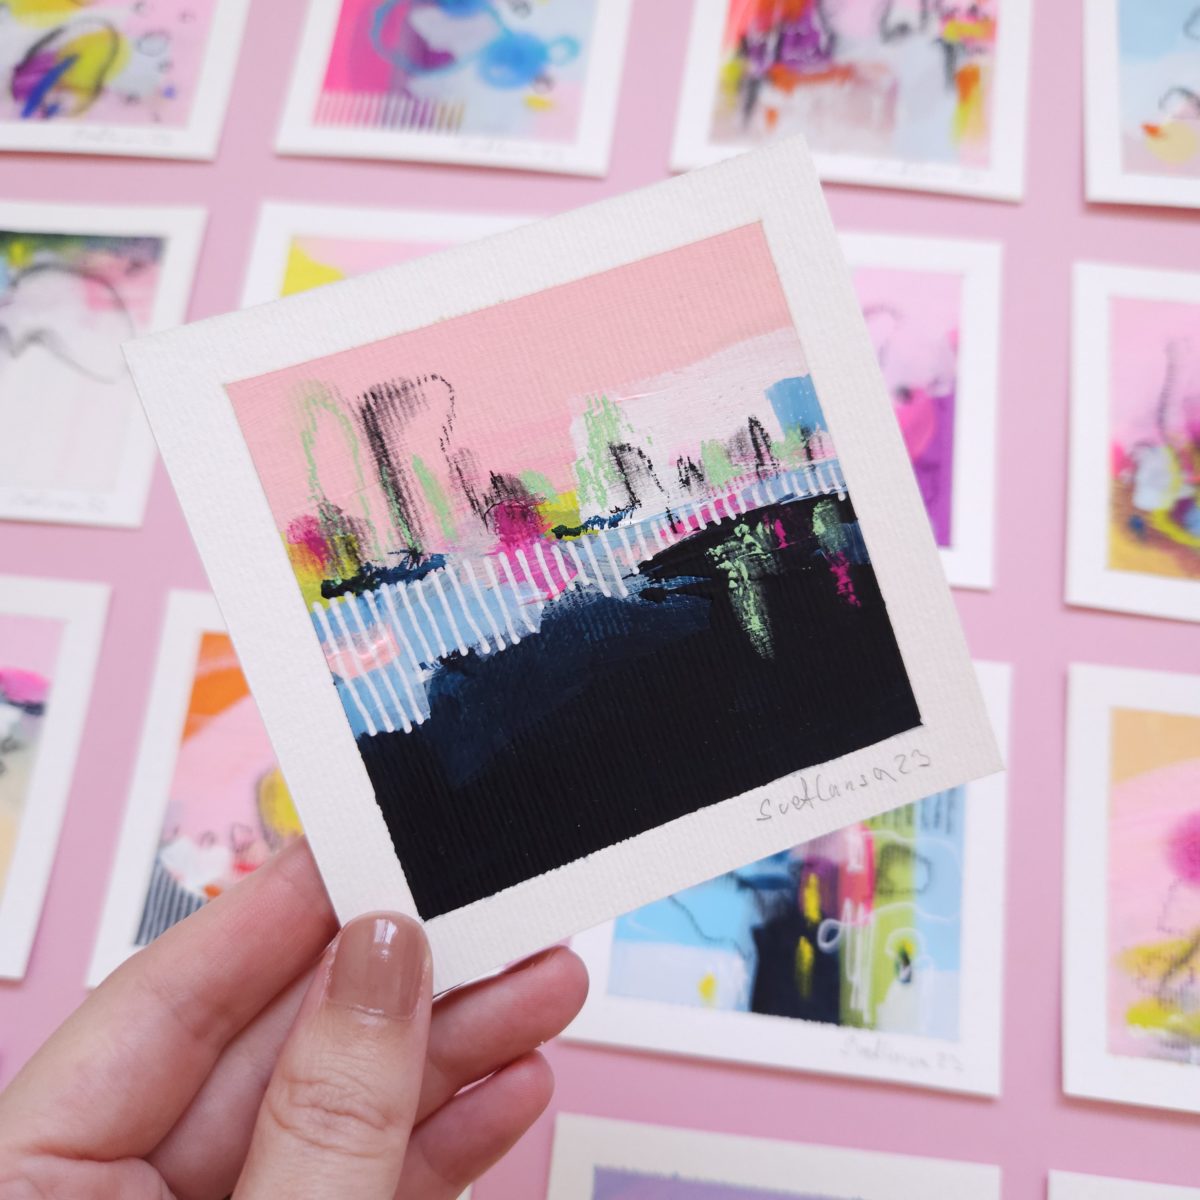 Fujifilm Instax Mini Pink Lemonade pellicule polaroid 10 pièce(s